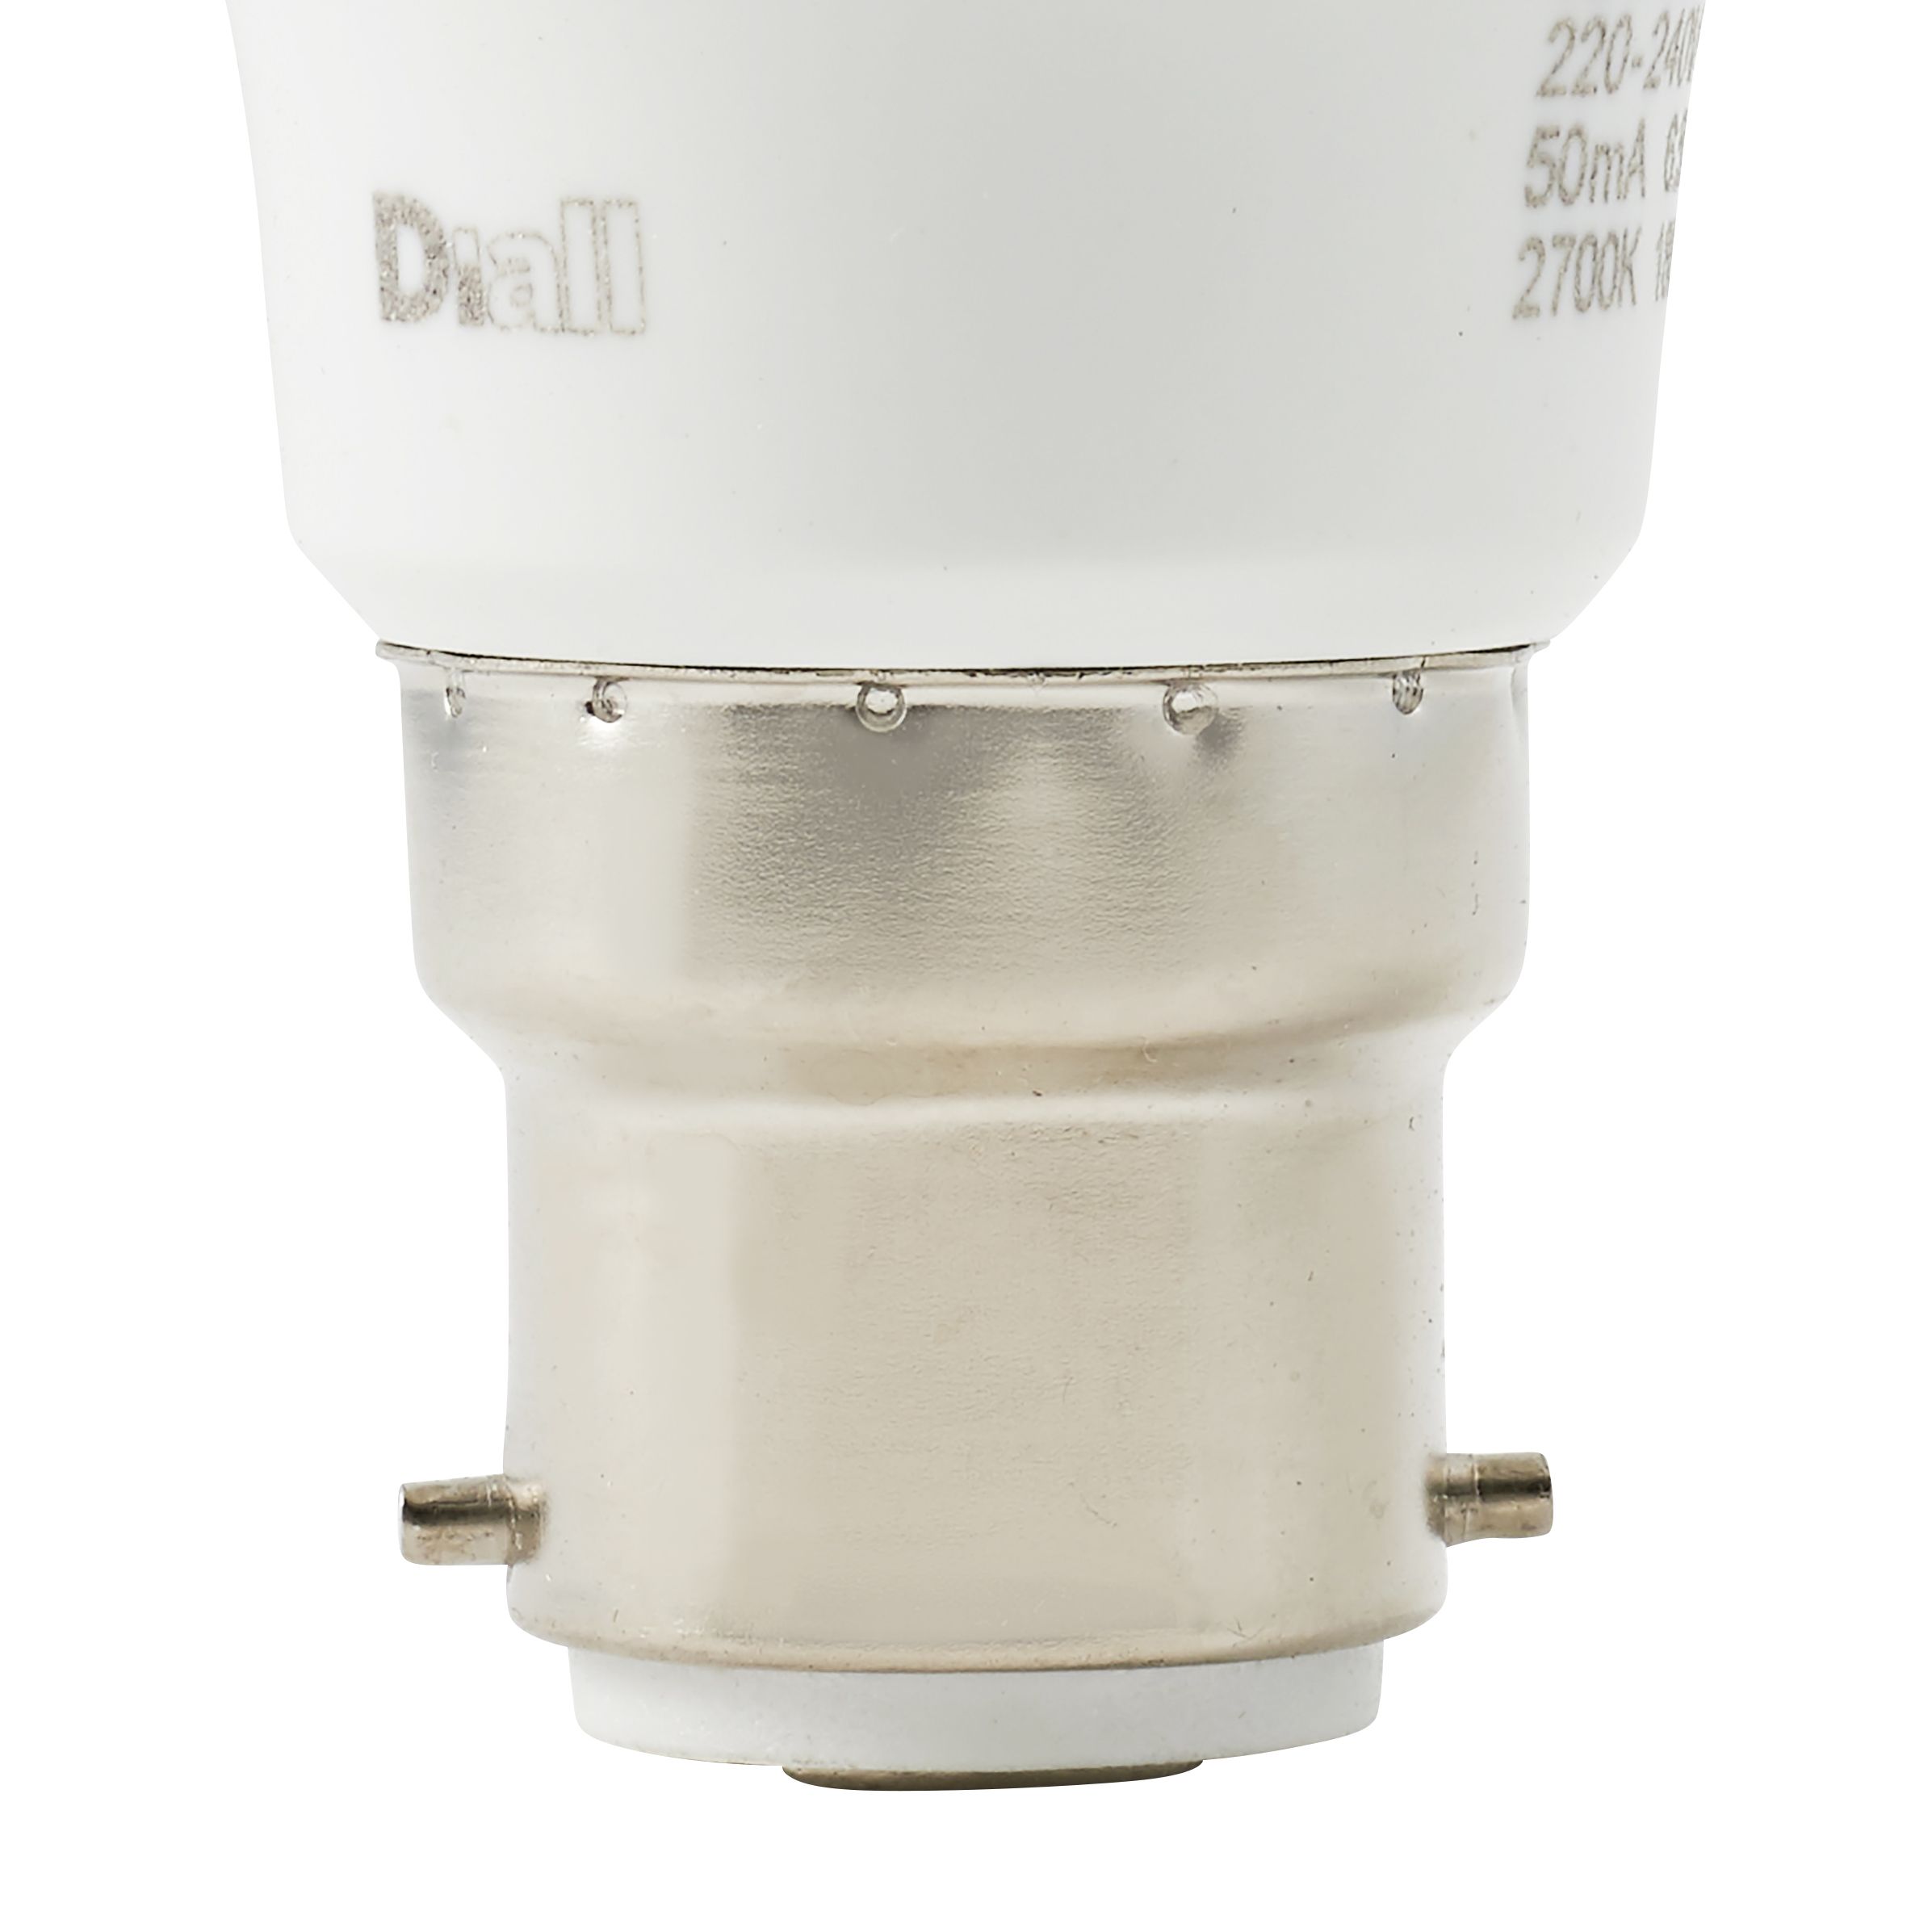 Diall B22 7.3W 806lm White A60 Neutral white LED Light bulb